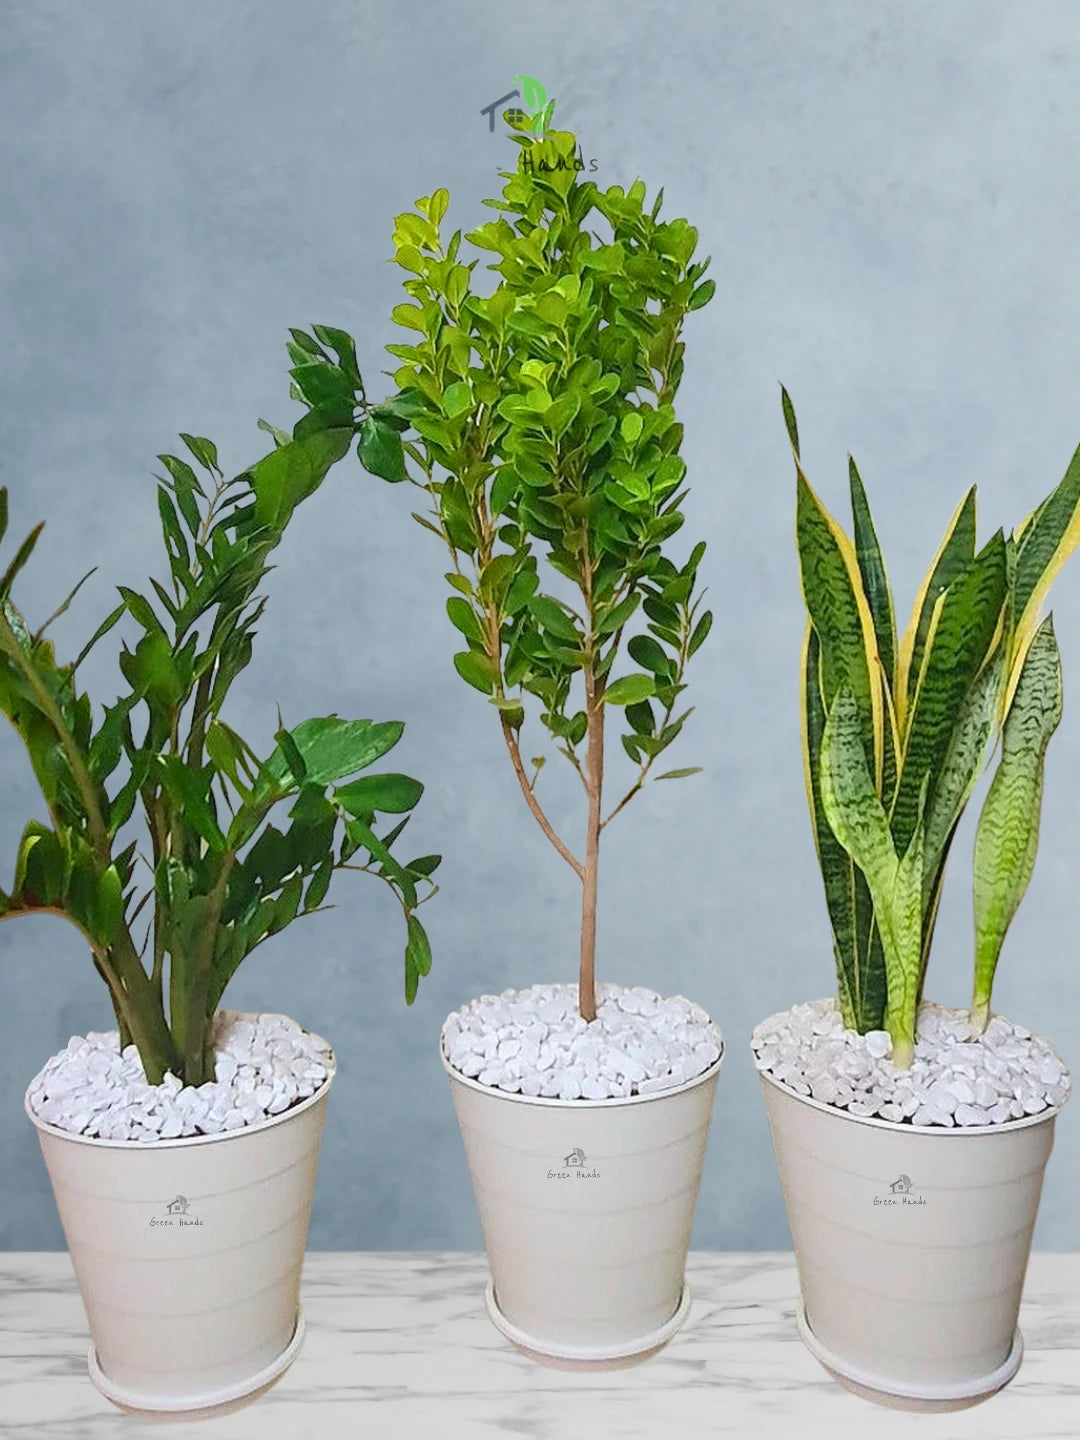 Zz or zanzibar gem, Ficus Panda, Snake Plants | Best Value Indoor Potted Plants bundle green for beginnershands